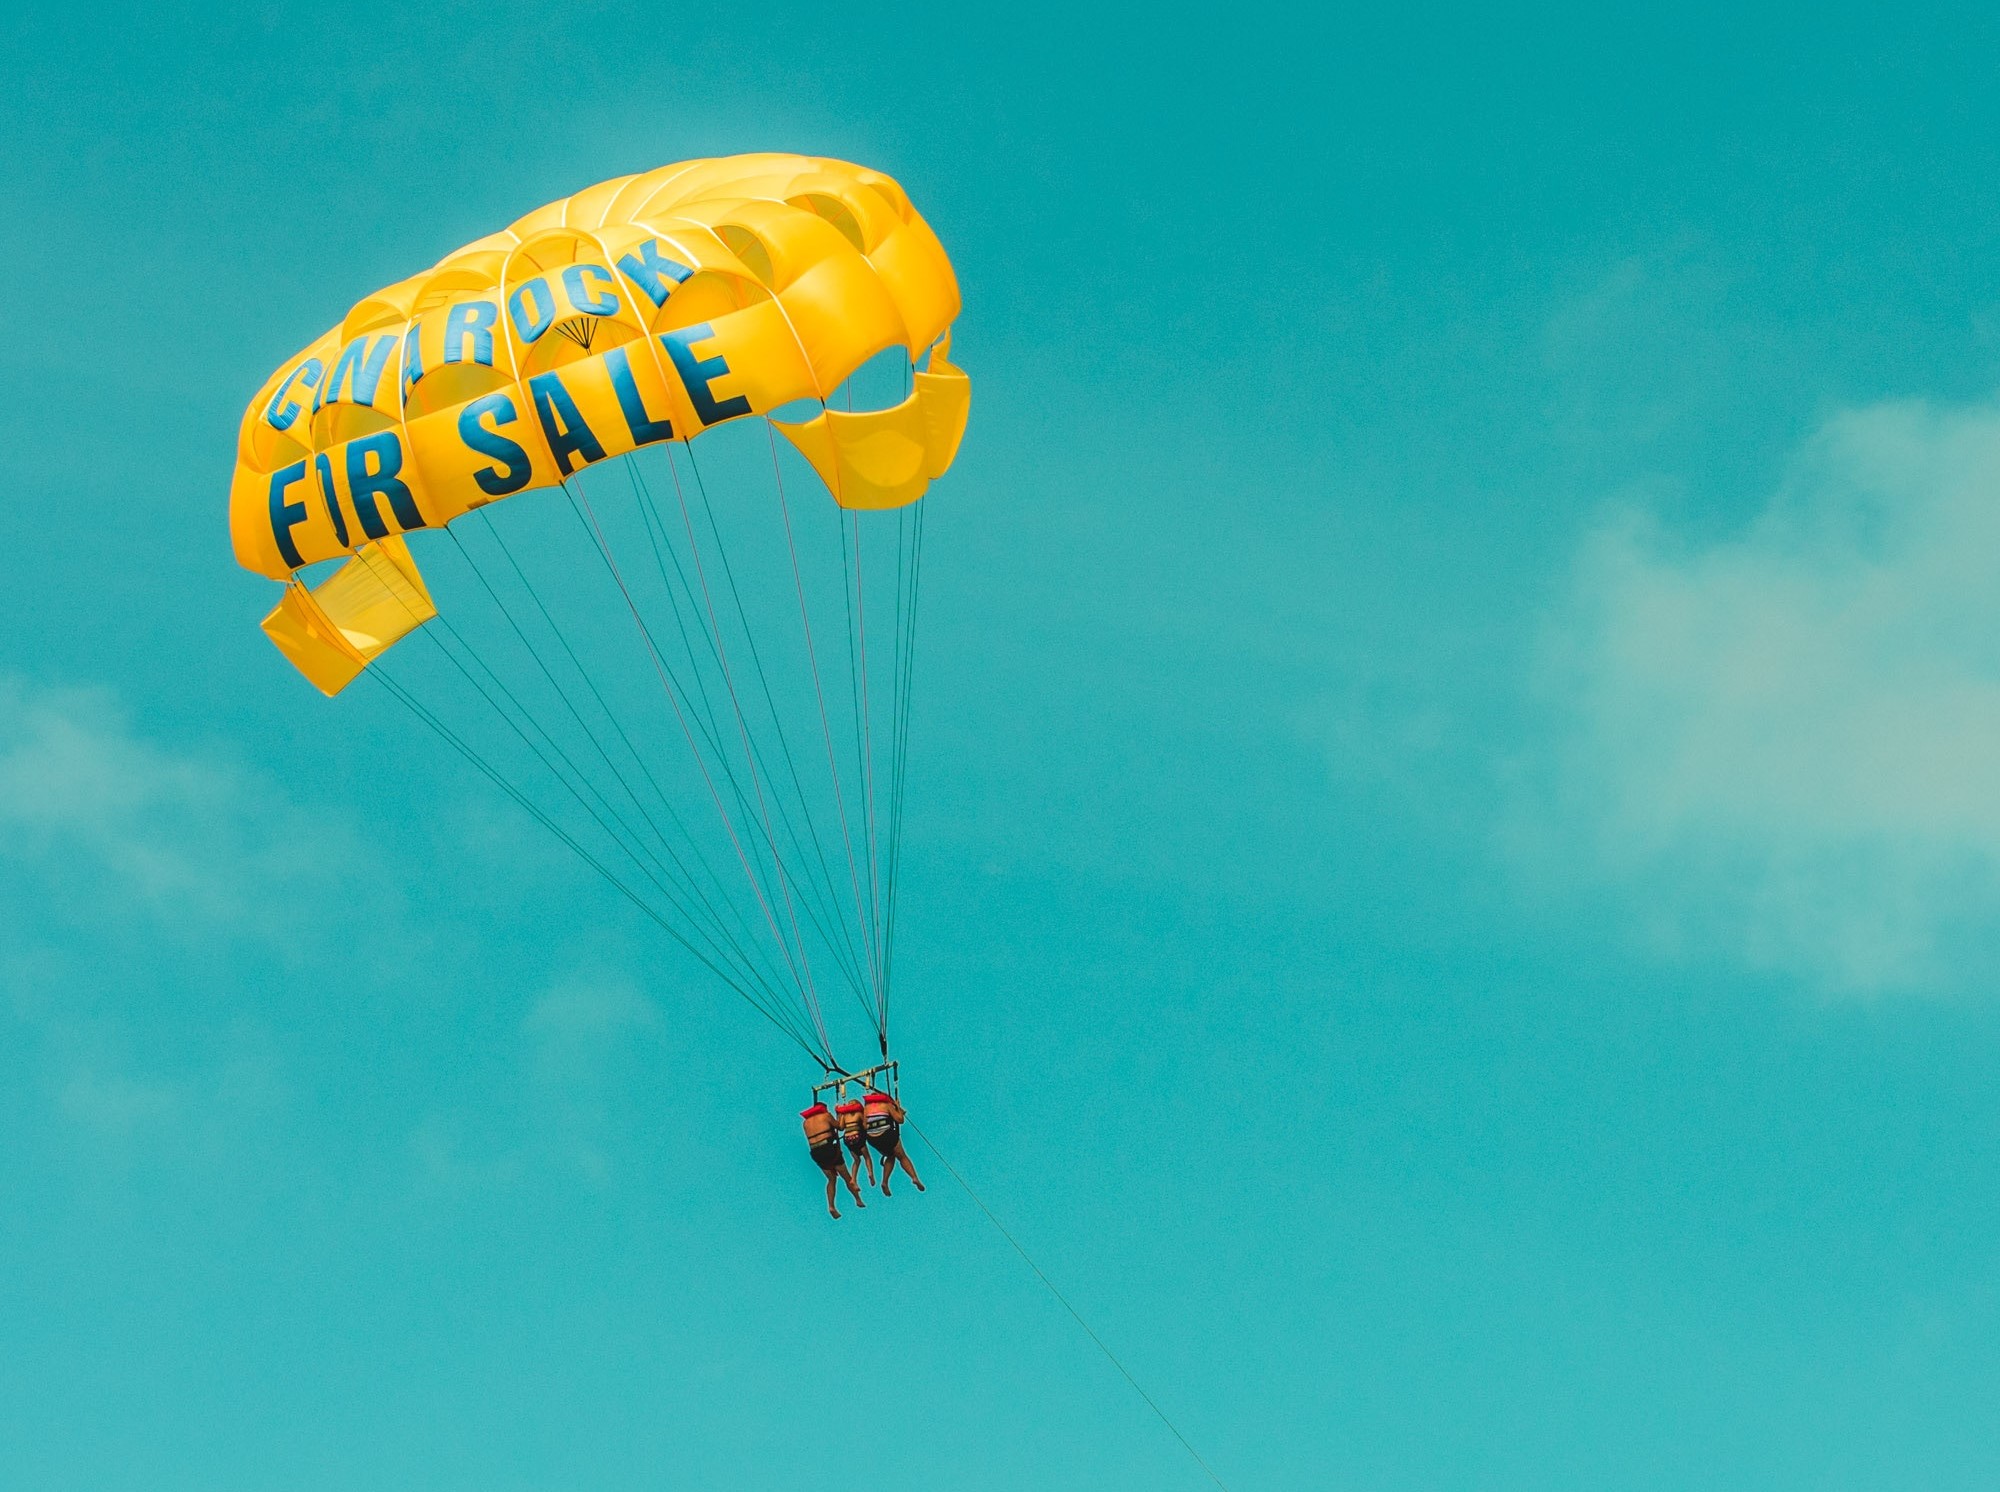 advertisement on parachute